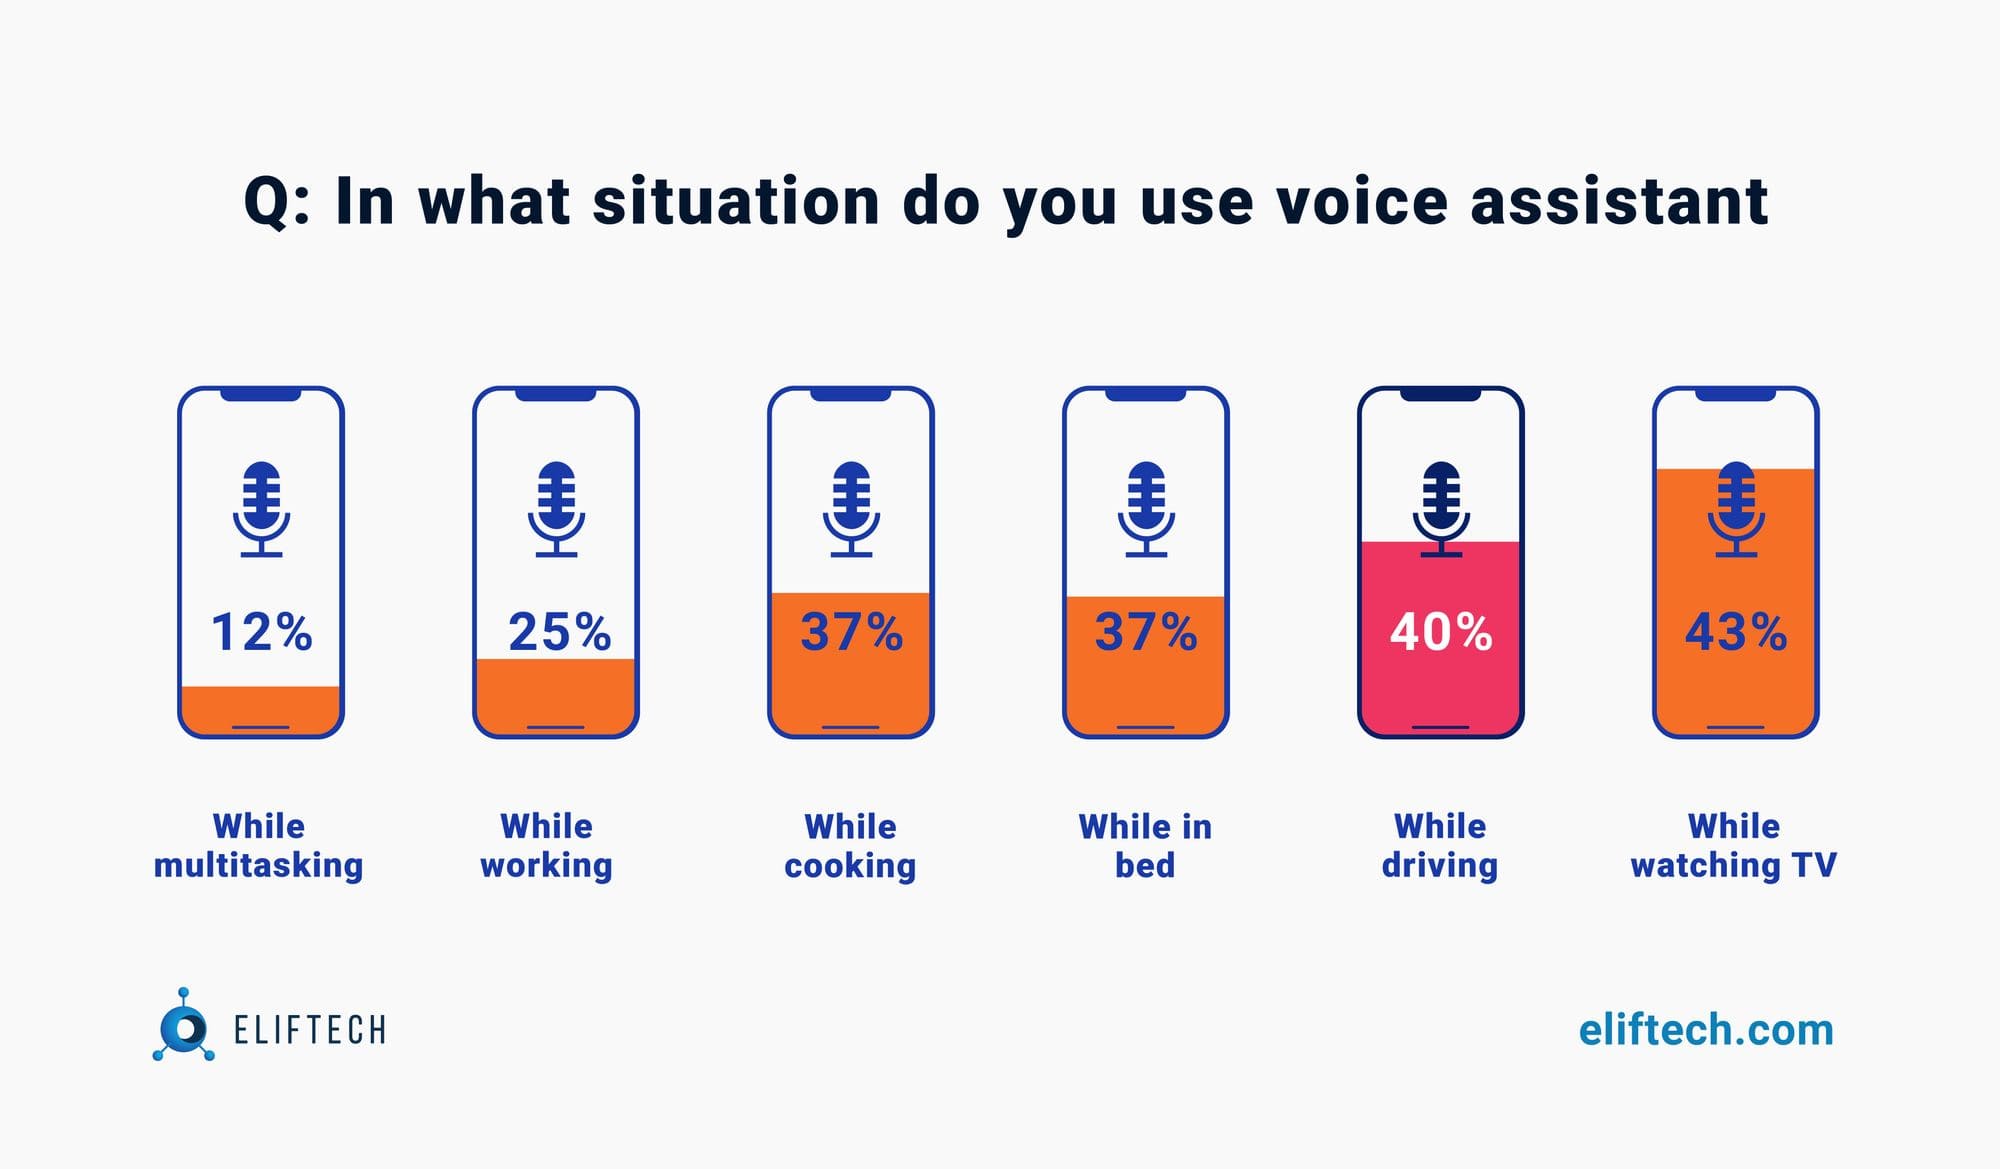 Voice assistance use cases